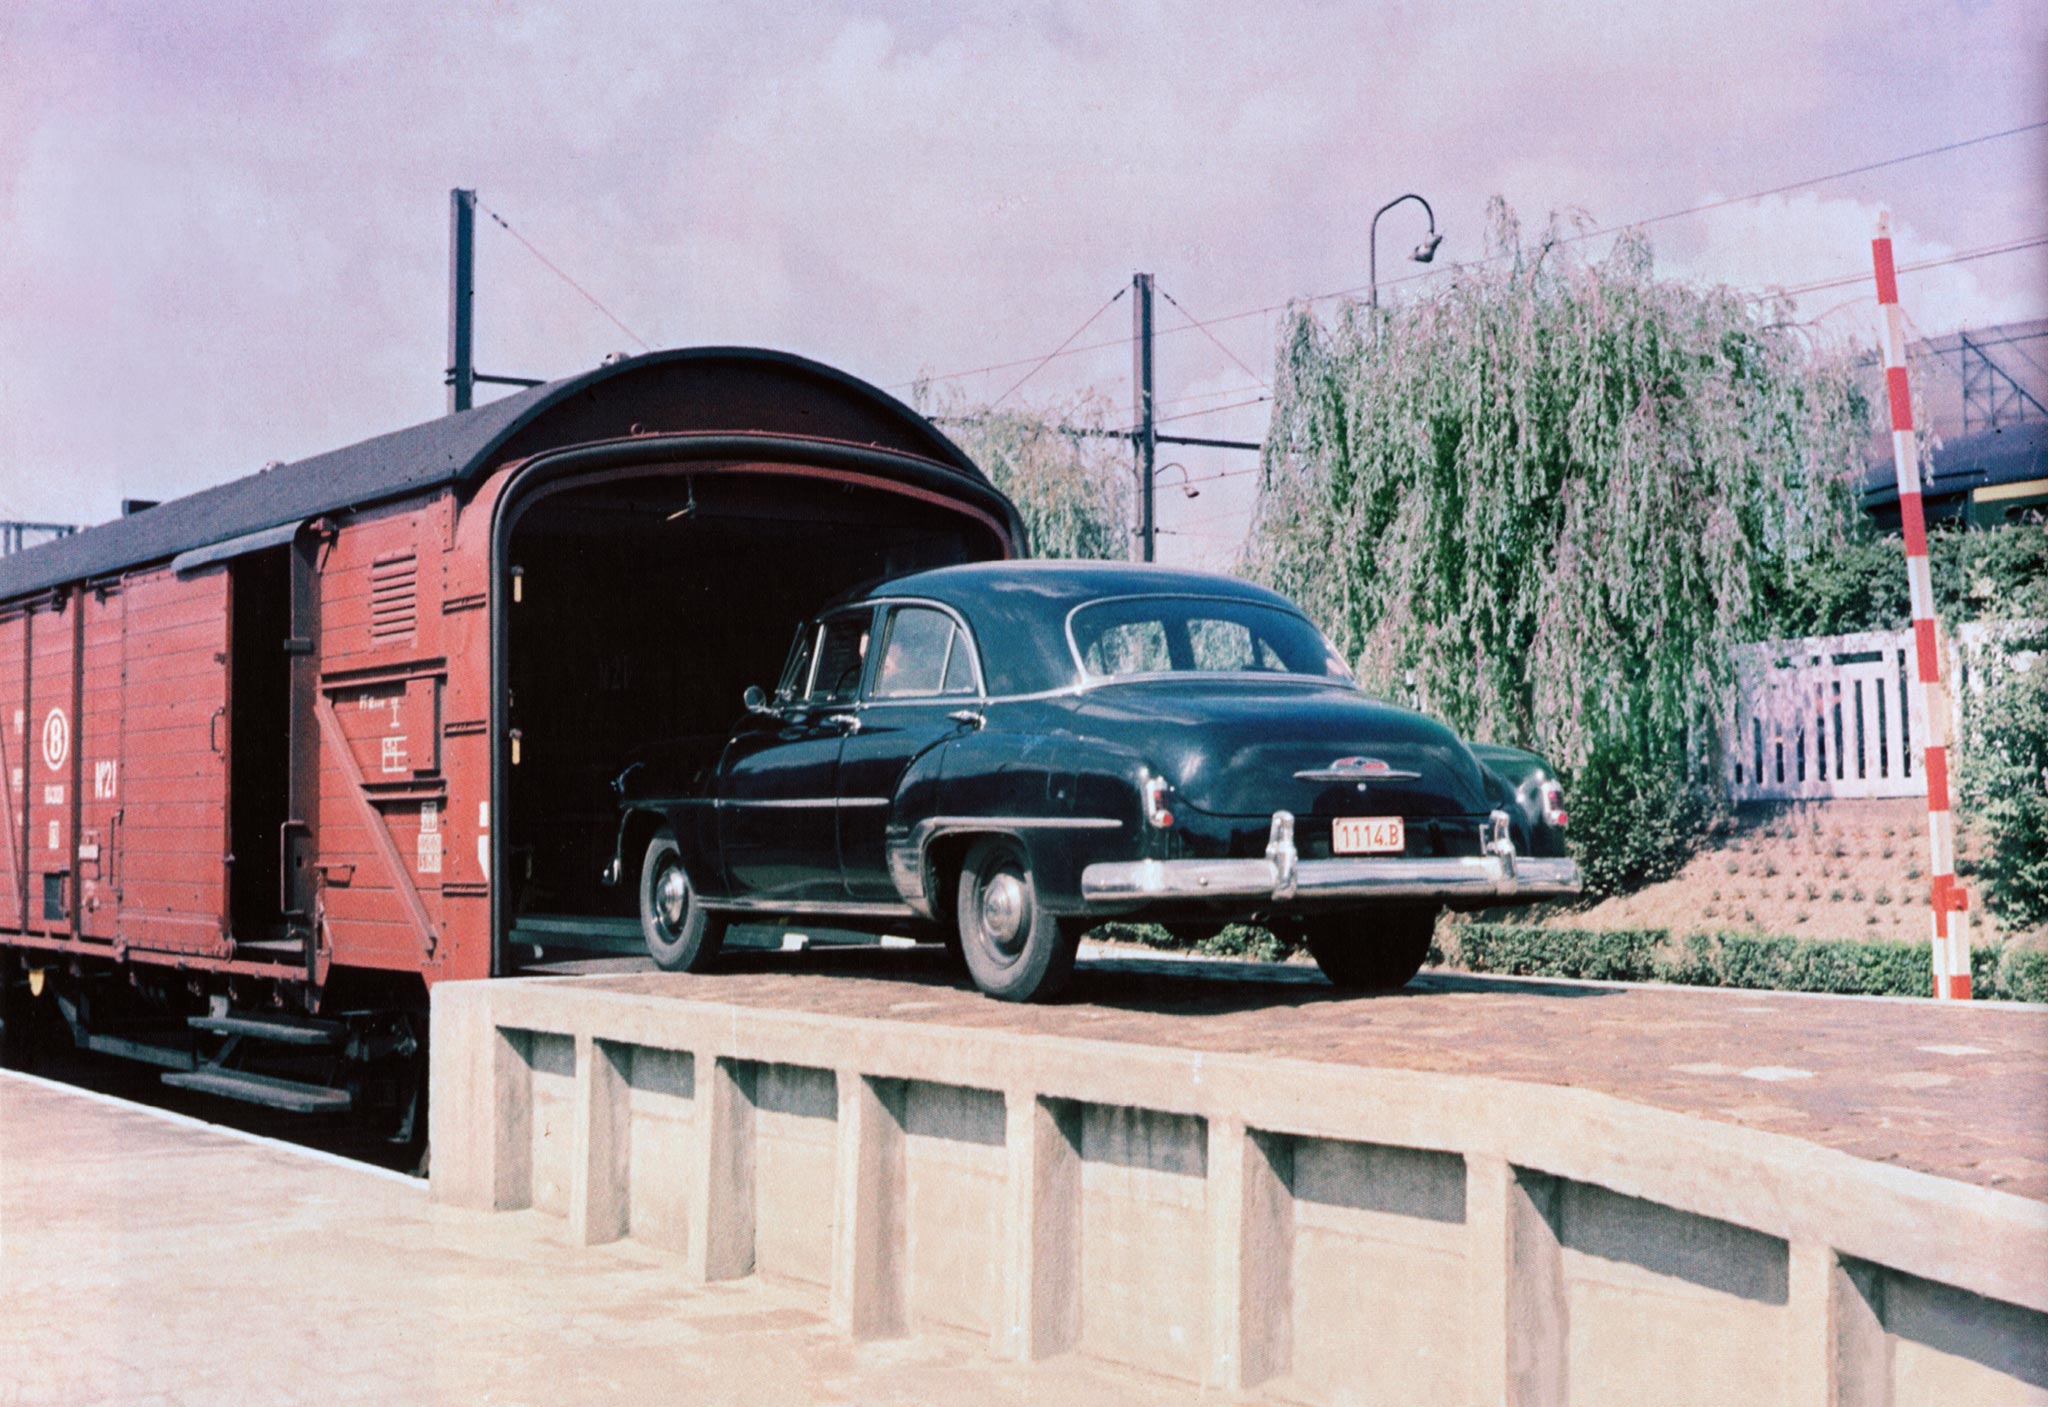 Car loading. Sleeper автомобиль. Двухэтажный трейлер 1956. Sleeping car Railway. Chipin around 1960.